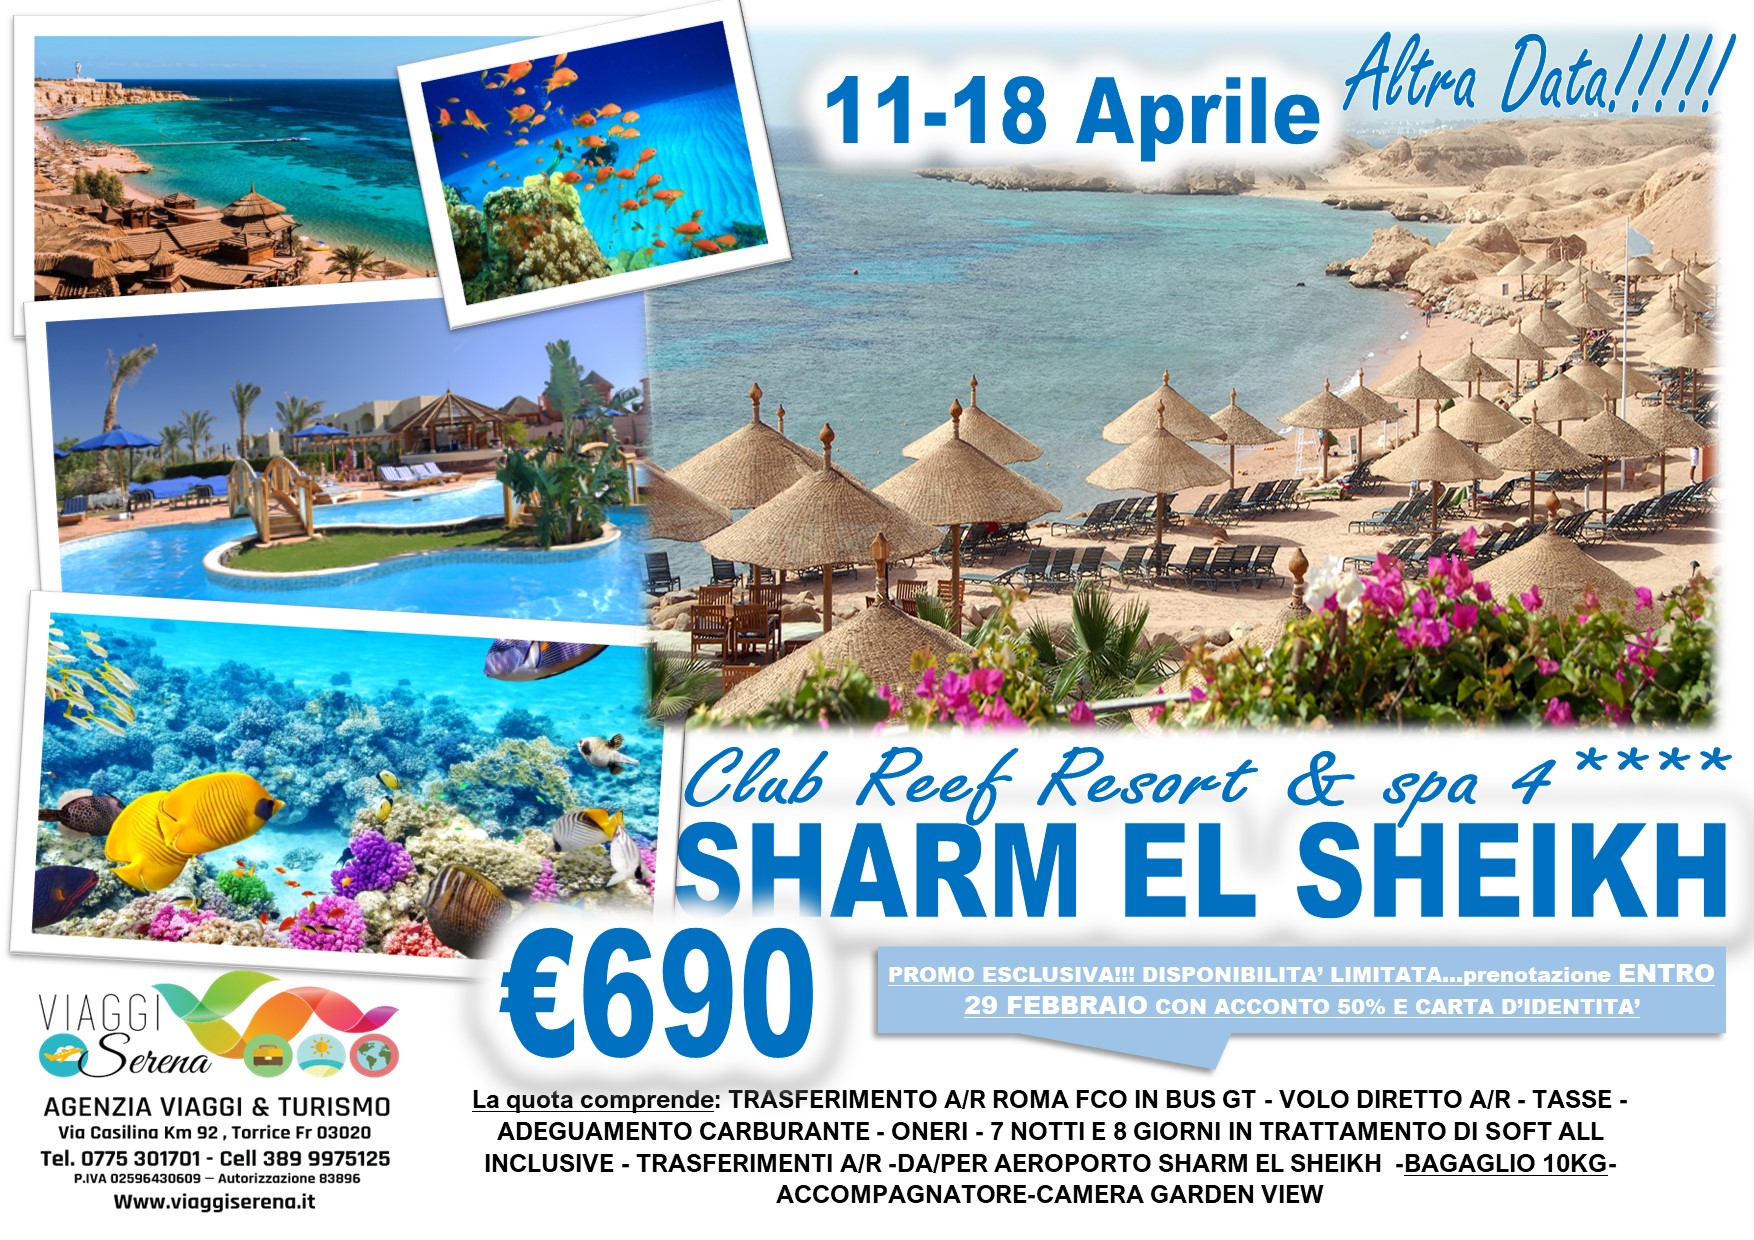 Viaggi di gruppo: Sharm el Sheikh Villaggio Club Reef Resort & Spa 4**** 11-18 Aprile € 690,00